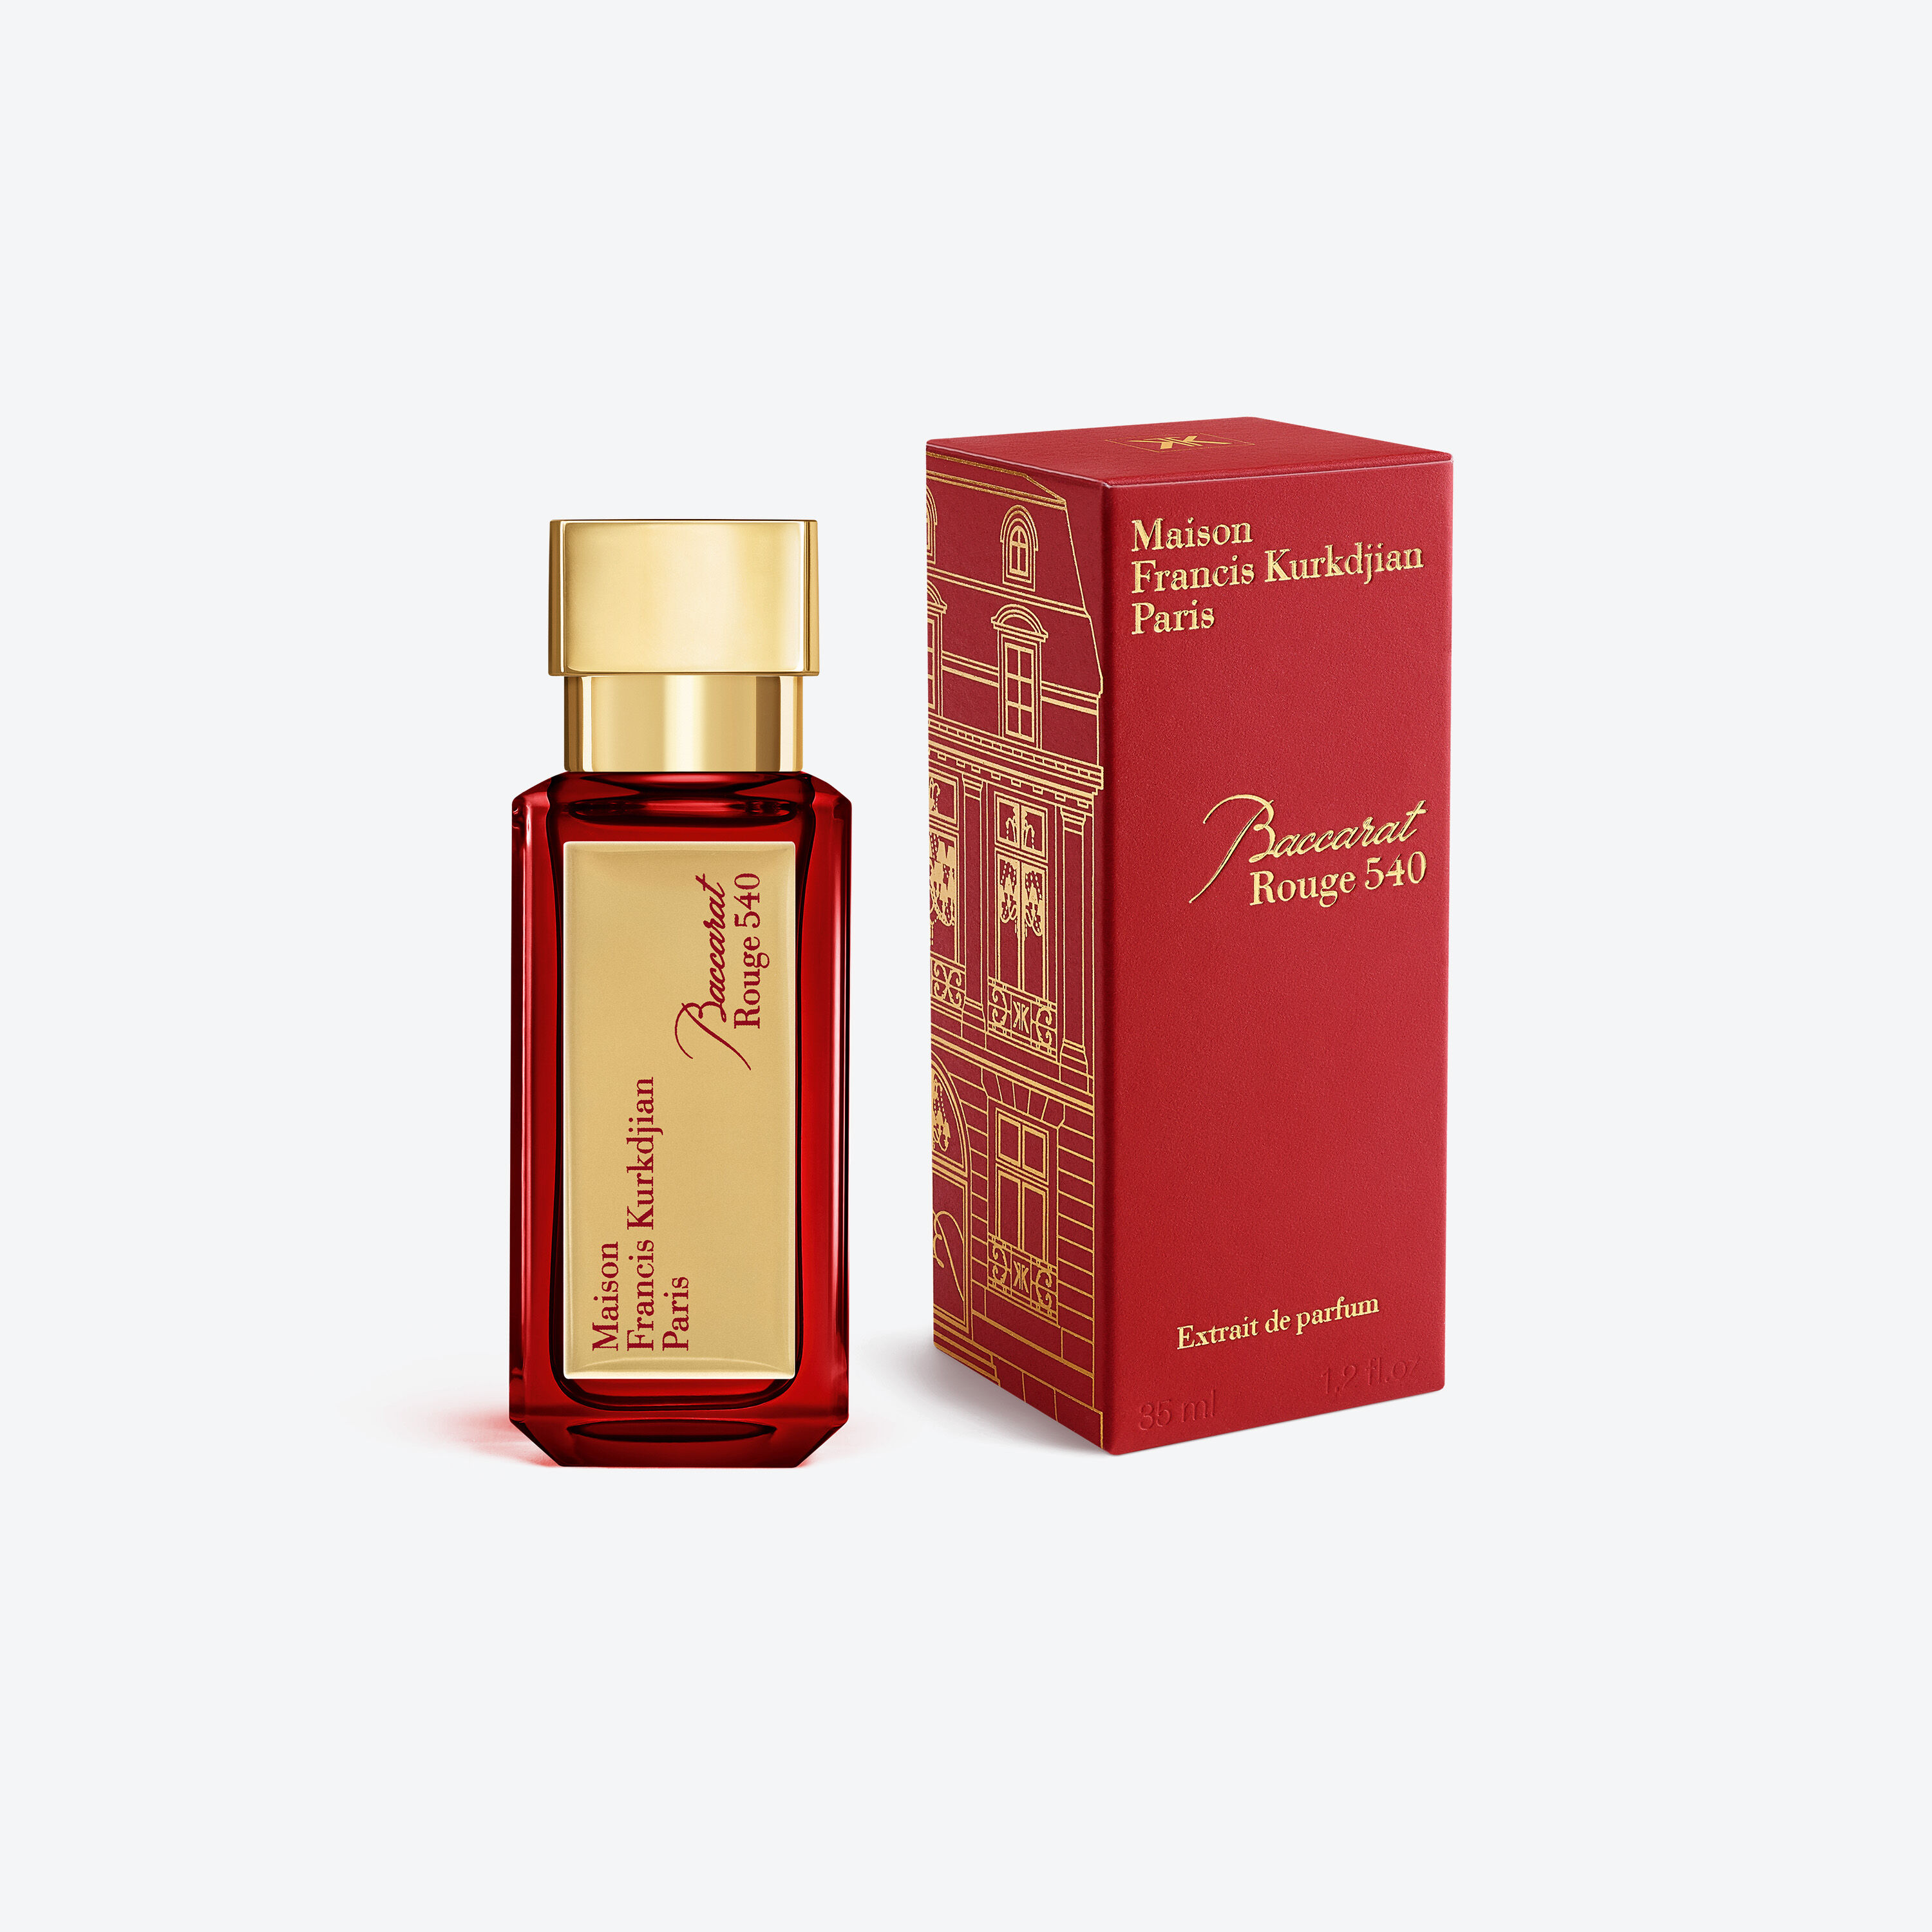 Baccarat Rouge 540 バカラ ルージュ 540 35ml香水 - 香水(女性用)